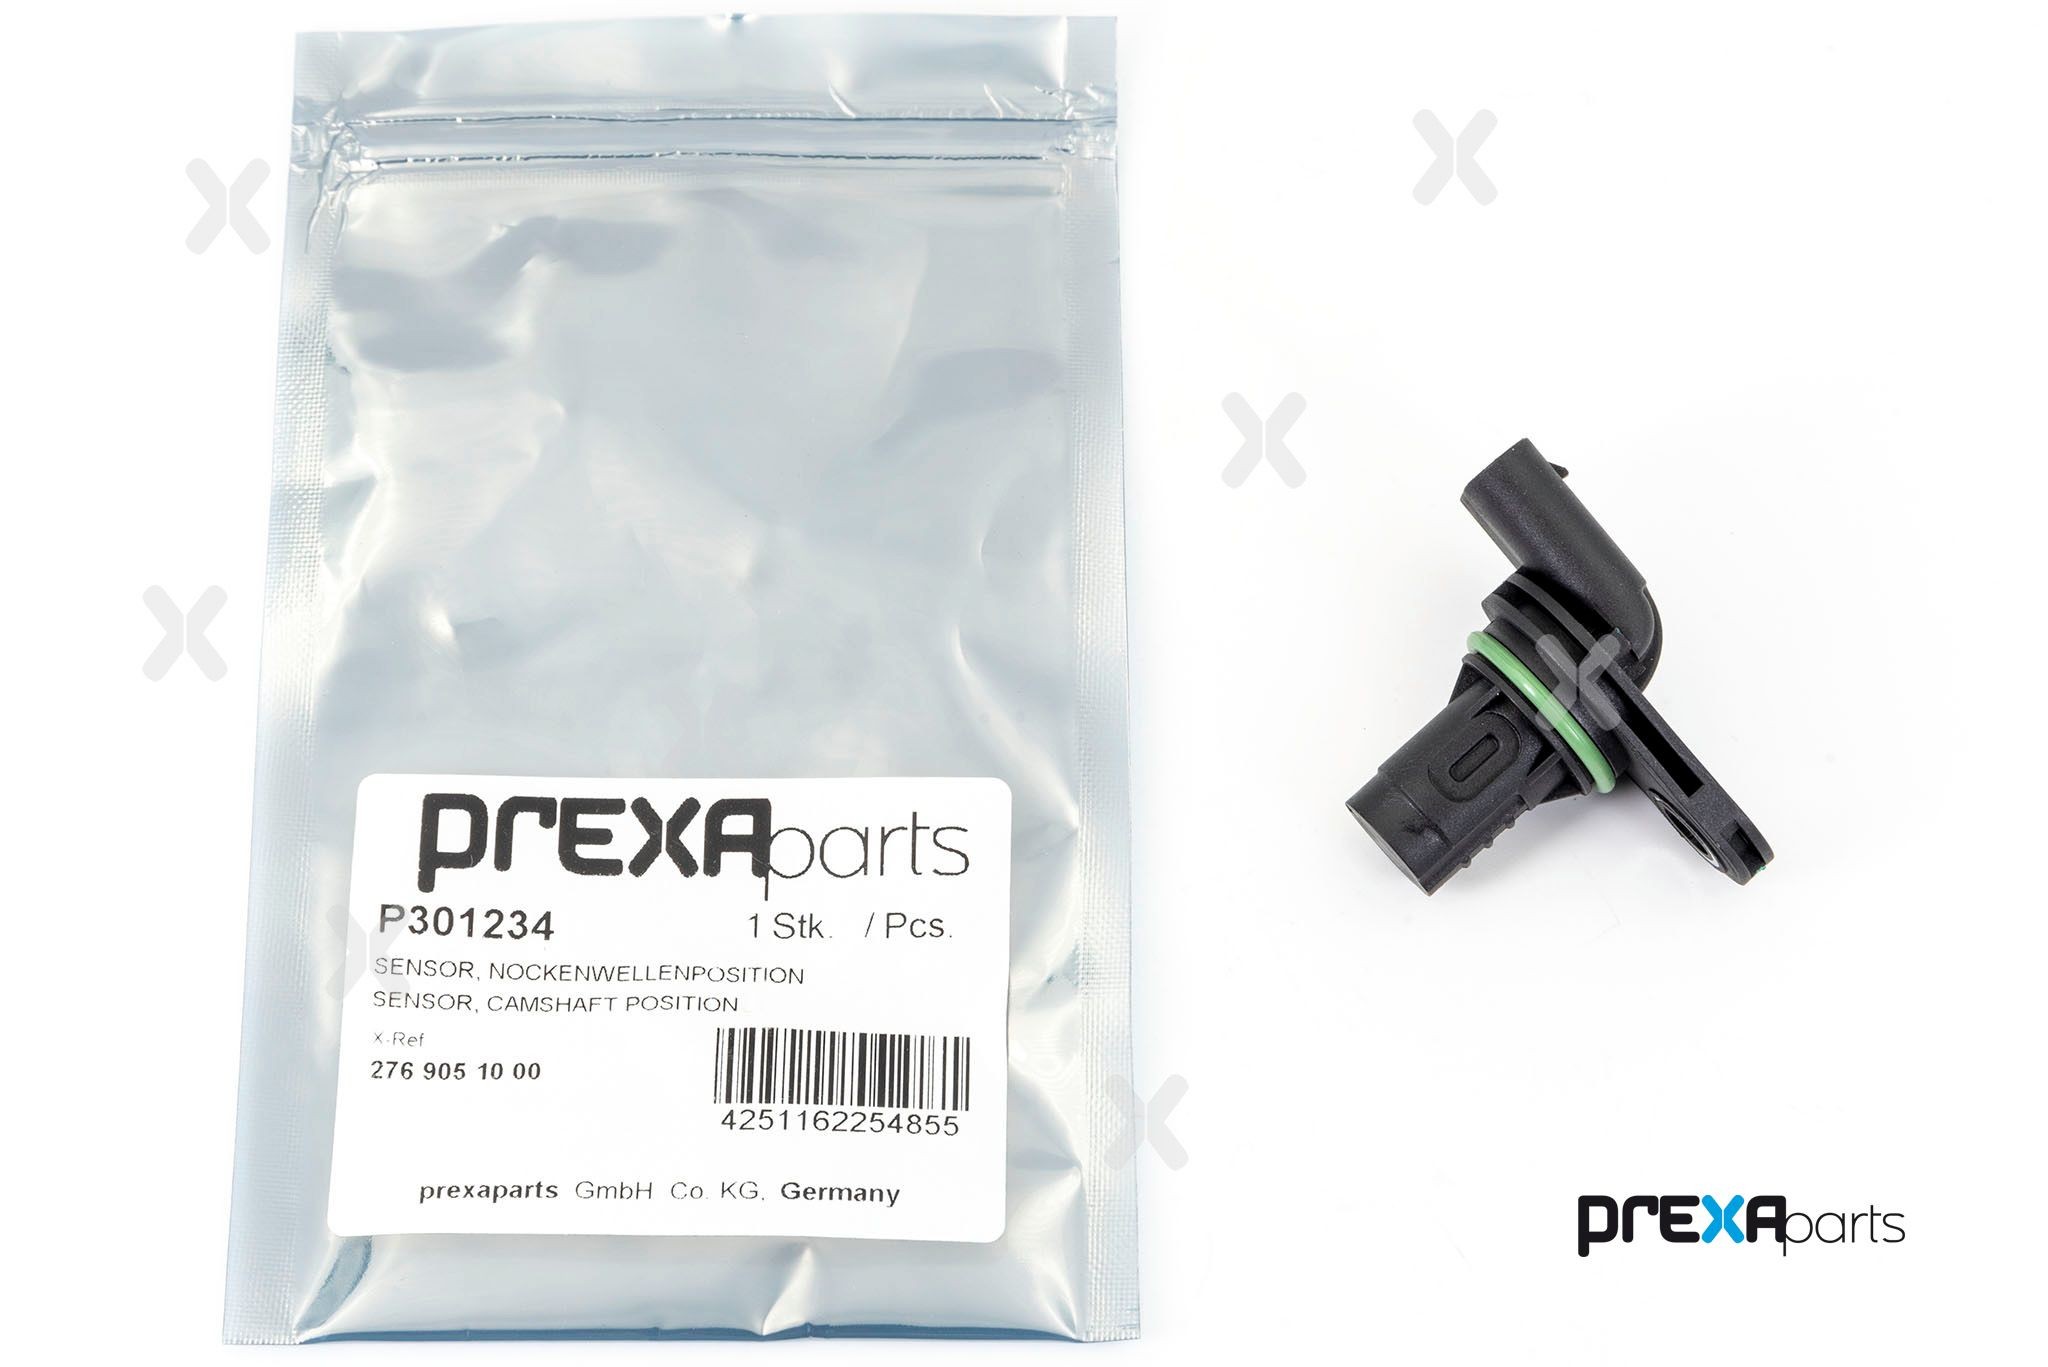 PREXAparts P301234 CMP sensor